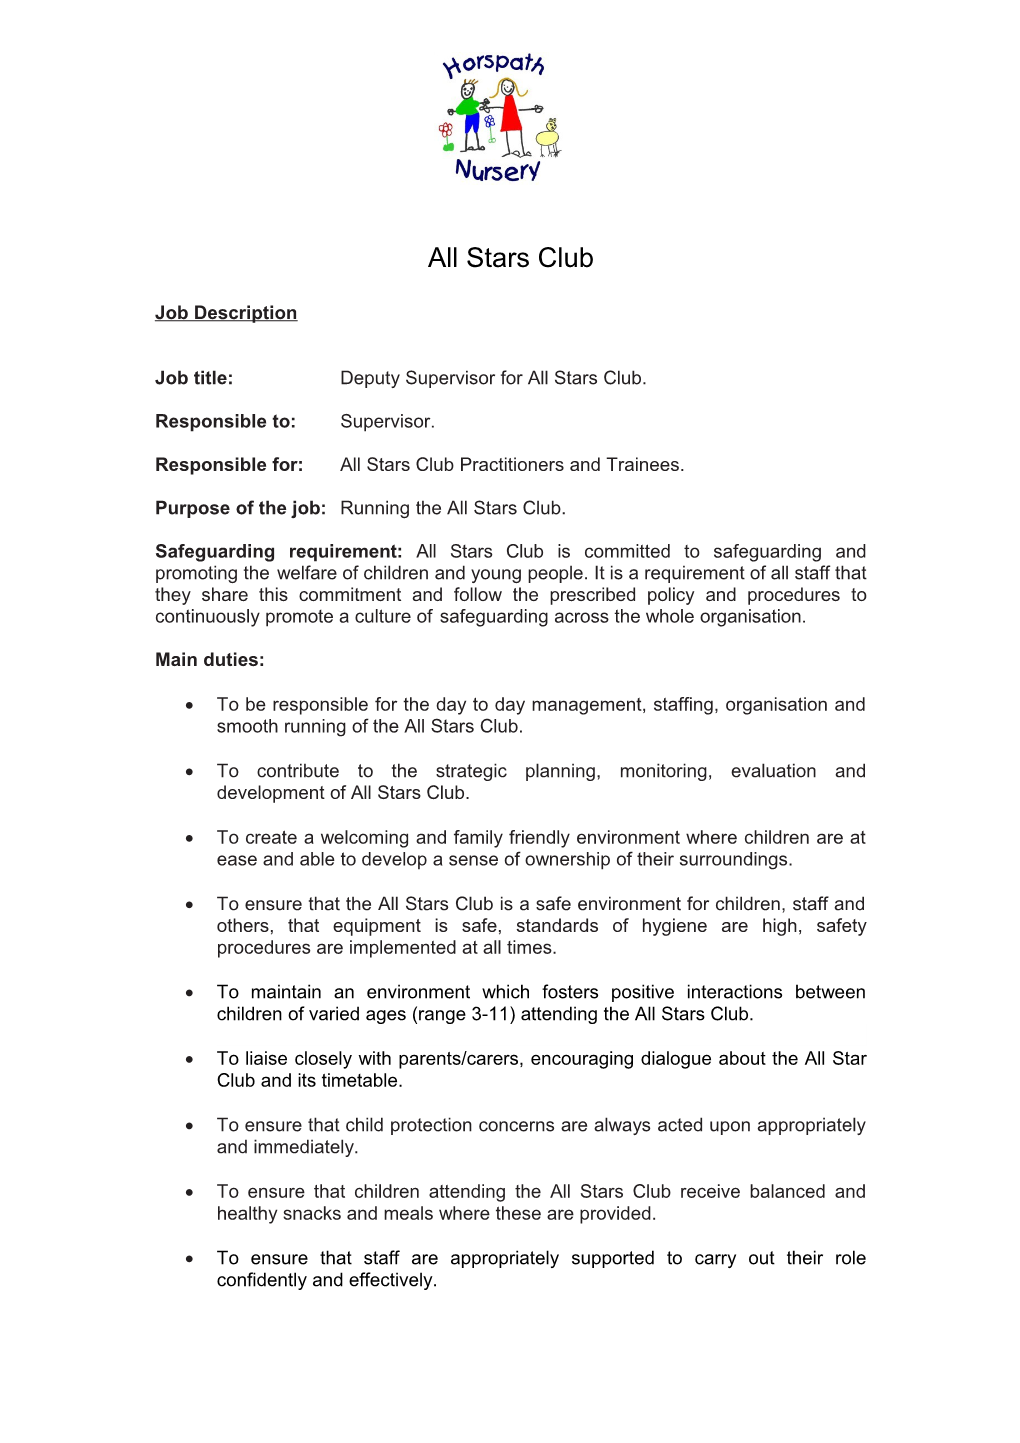 Job Title:Deputy Supervisor for All Stars Club